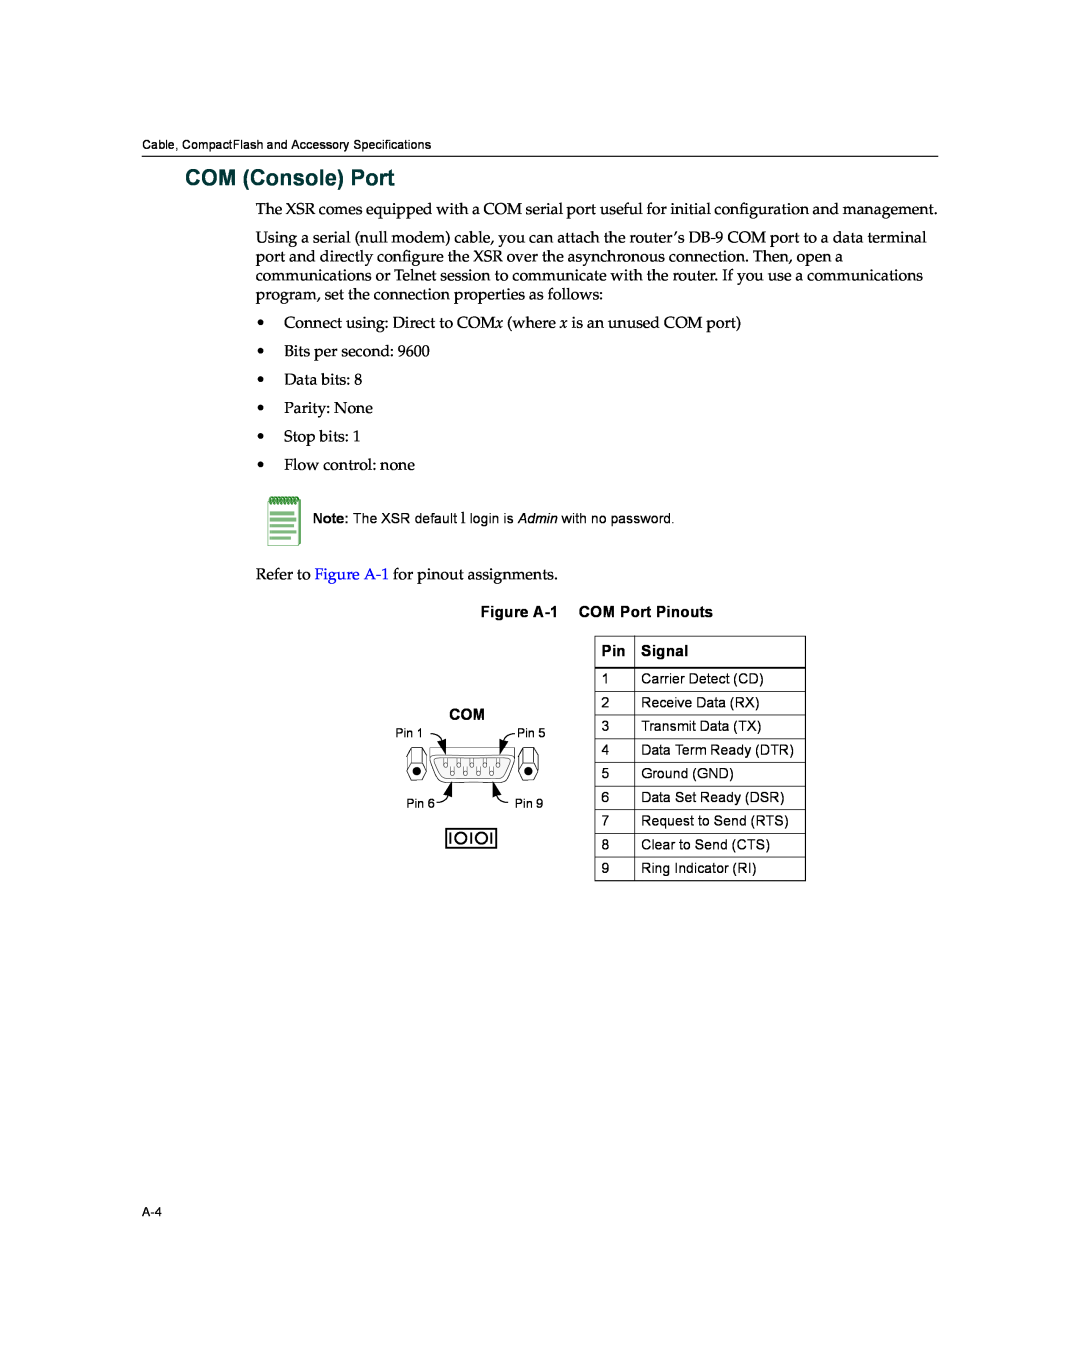 Enterasys Networks XSR-3020 manual COM Console Port, Figure A-1 COM Port Pinouts, Signal 